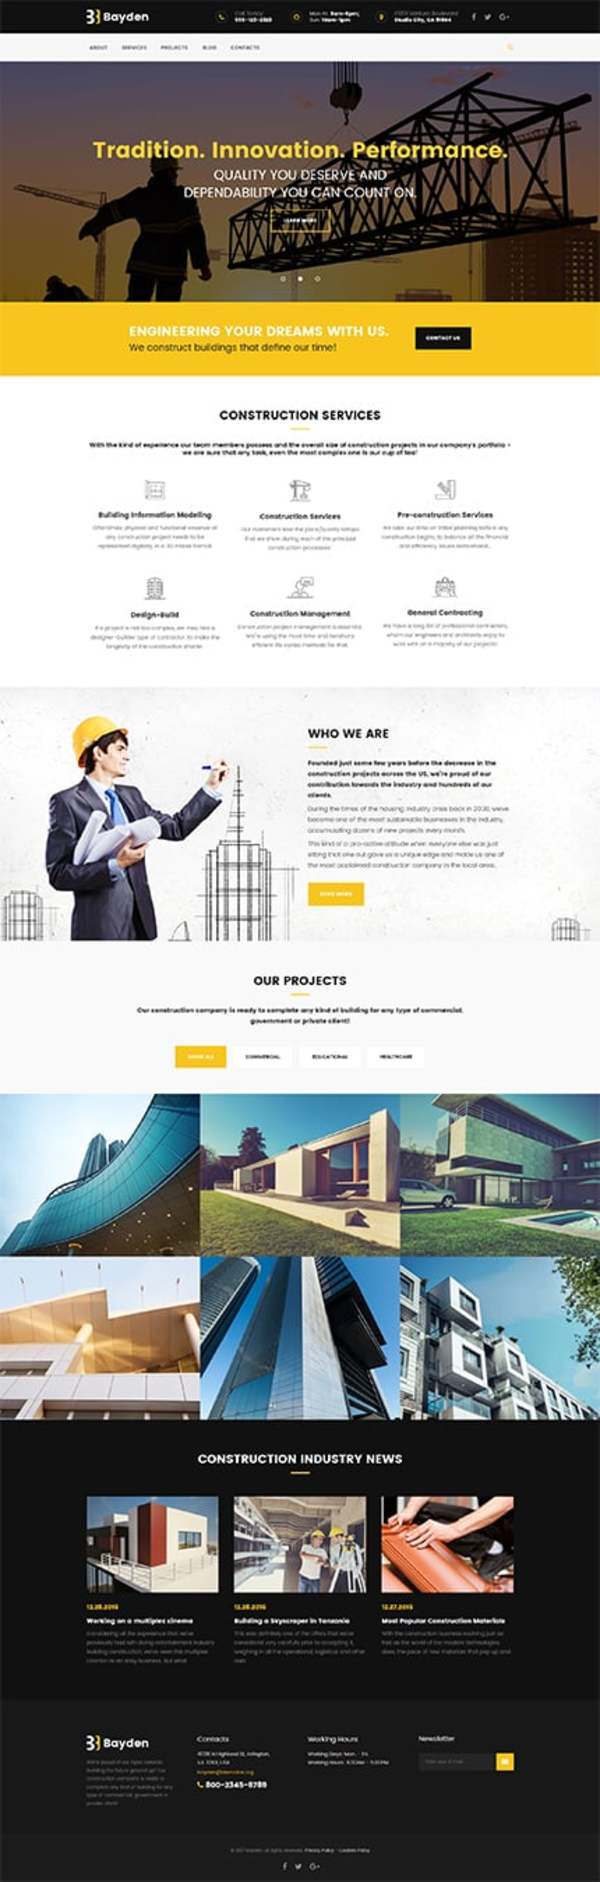 Bayden - Architecture& Construction Company Responsive WordPress Theme